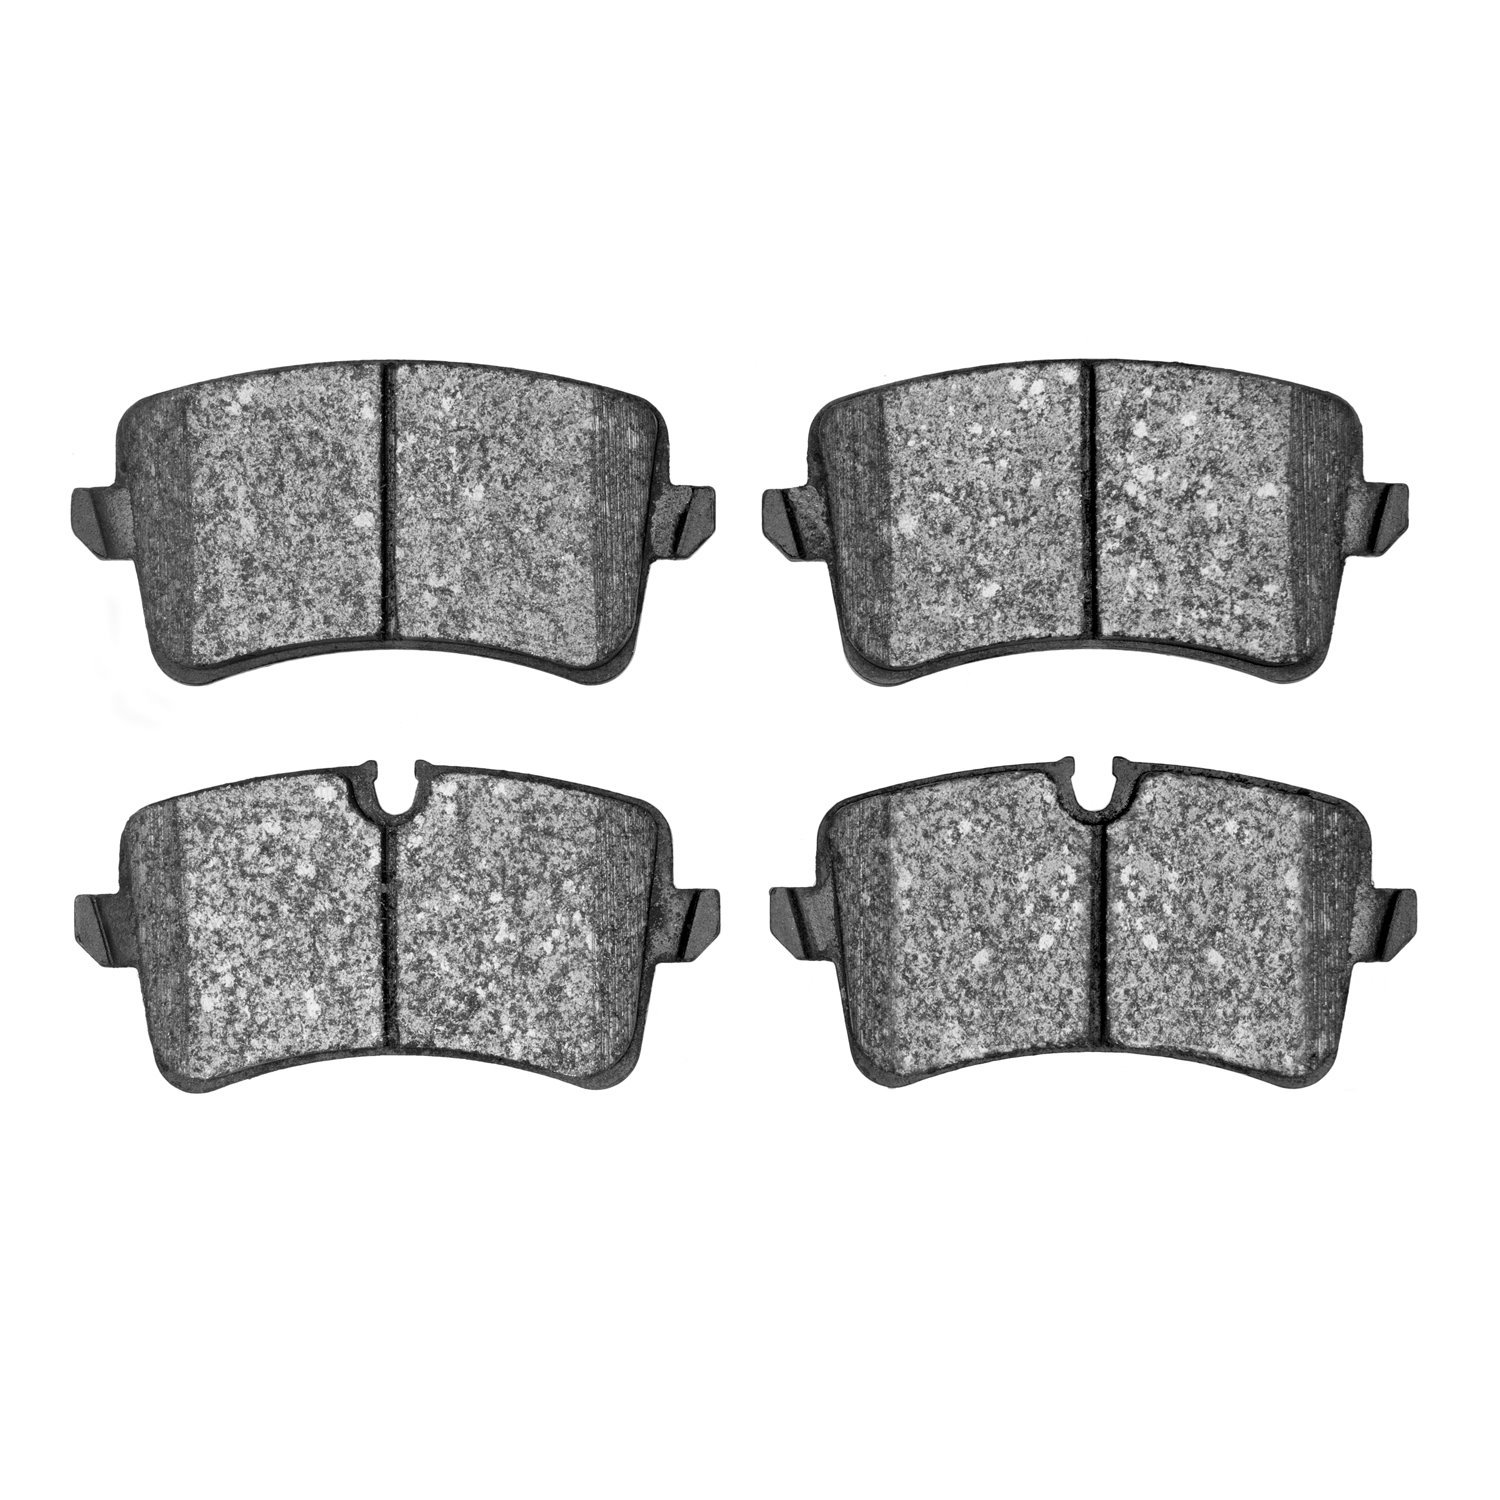 1600-1547-00 5000 Euro Ceramic Brake Pads, 2011-2021 Multiple Makes/Models, Position: Rear